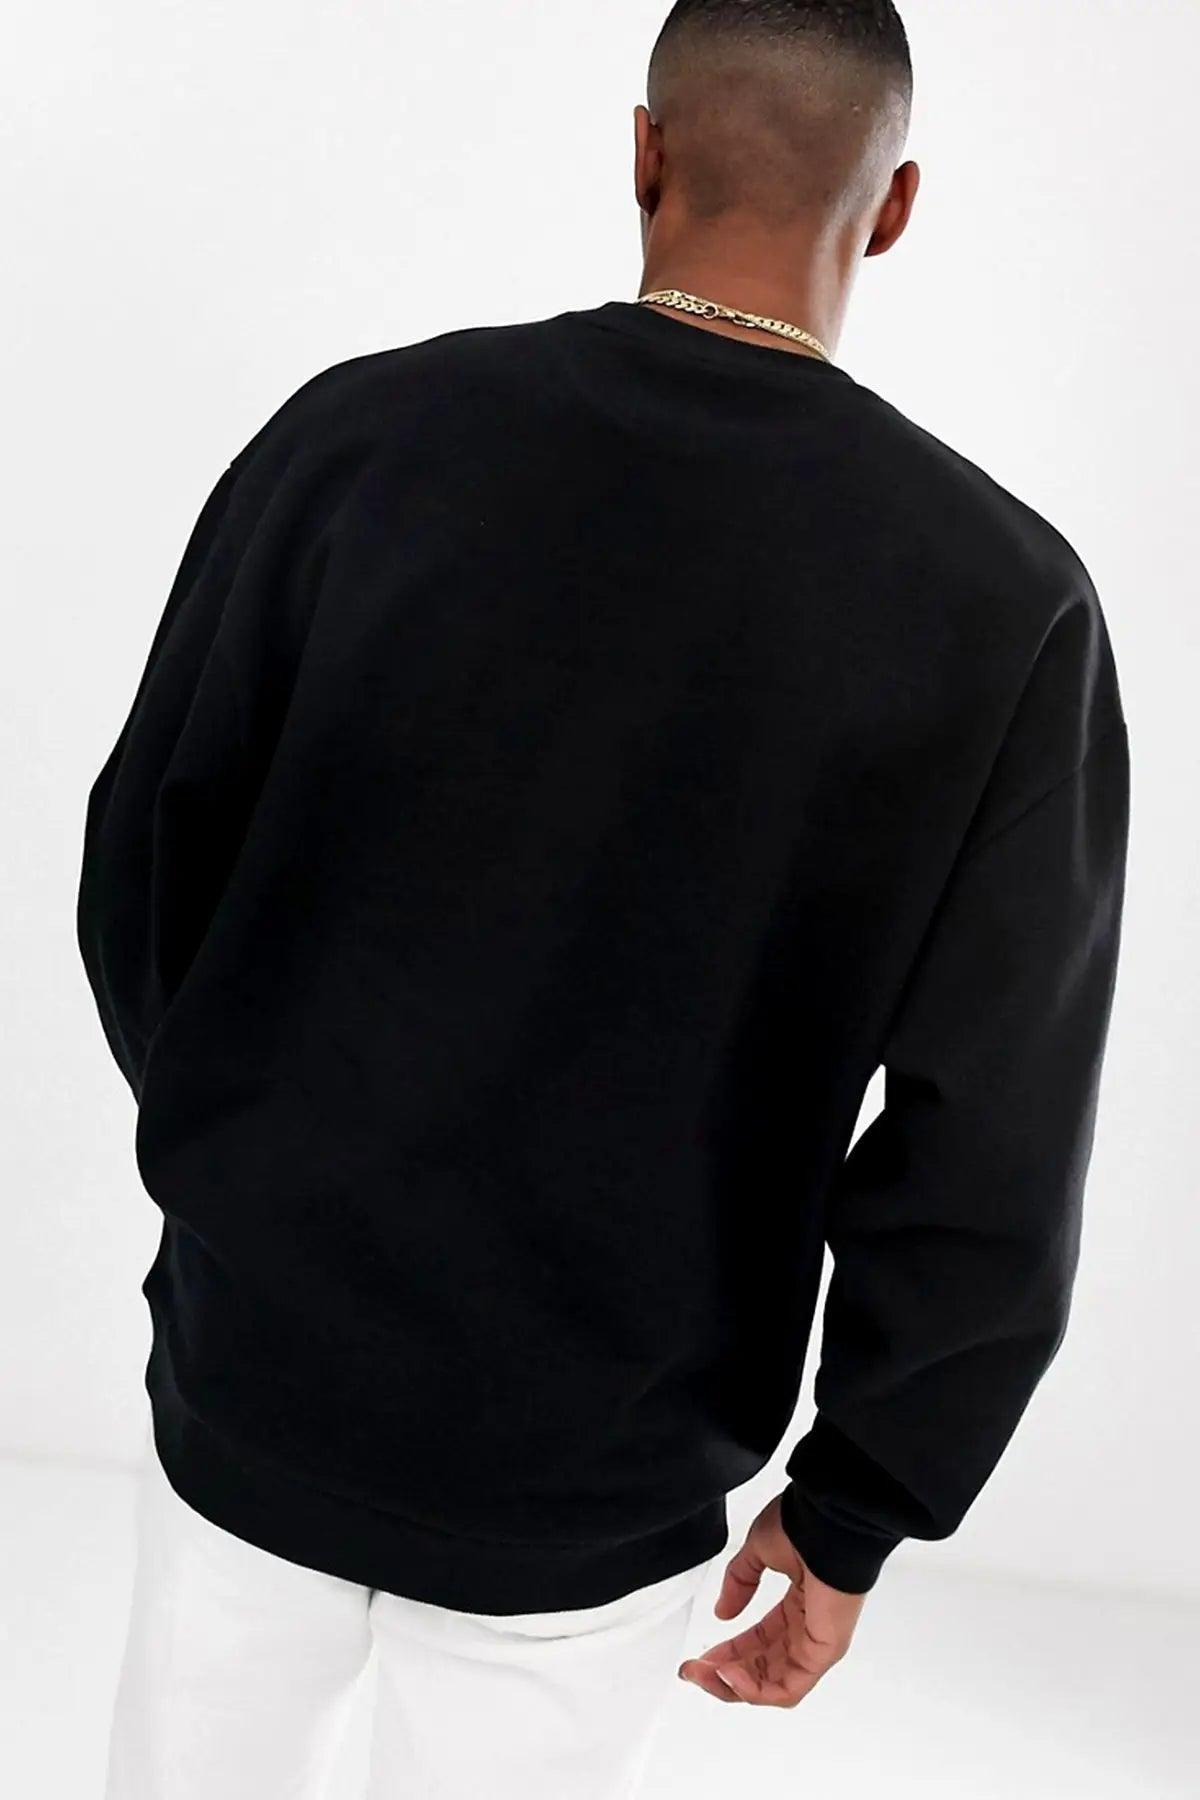 Poker Face Oversize Erkek Sweatshirt - PΛSΛGE